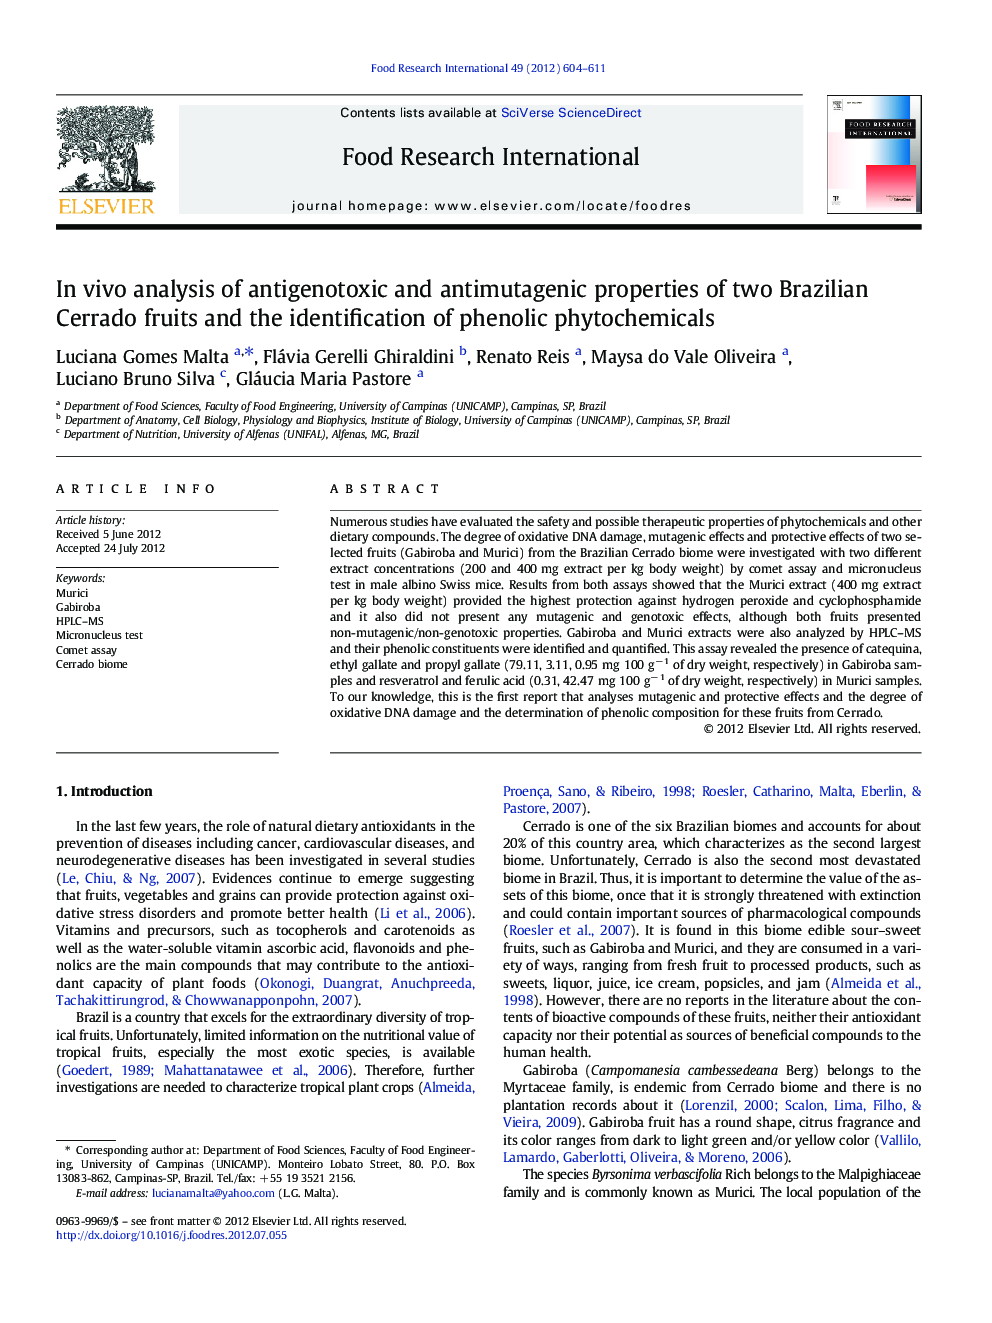 In vivo analysis of antigenotoxic and antimutagenic properties of two Brazilian Cerrado fruits and the identification of phenolic phytochemicals